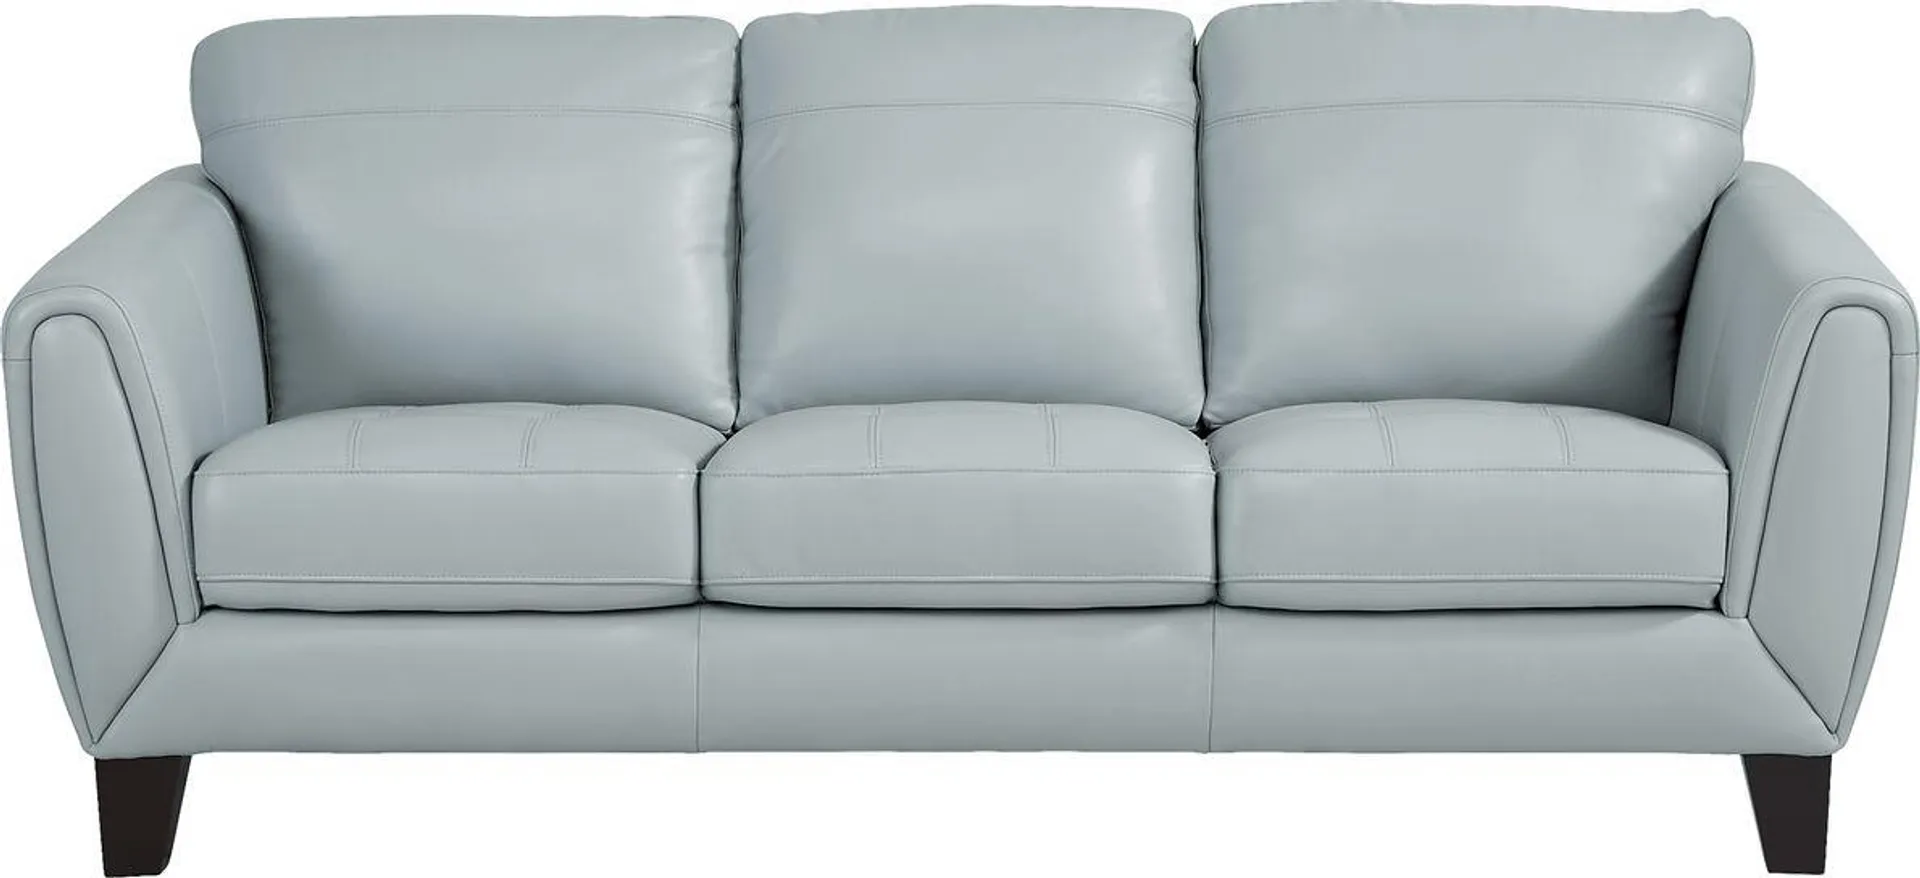 Livorno Lane Leather Sofa